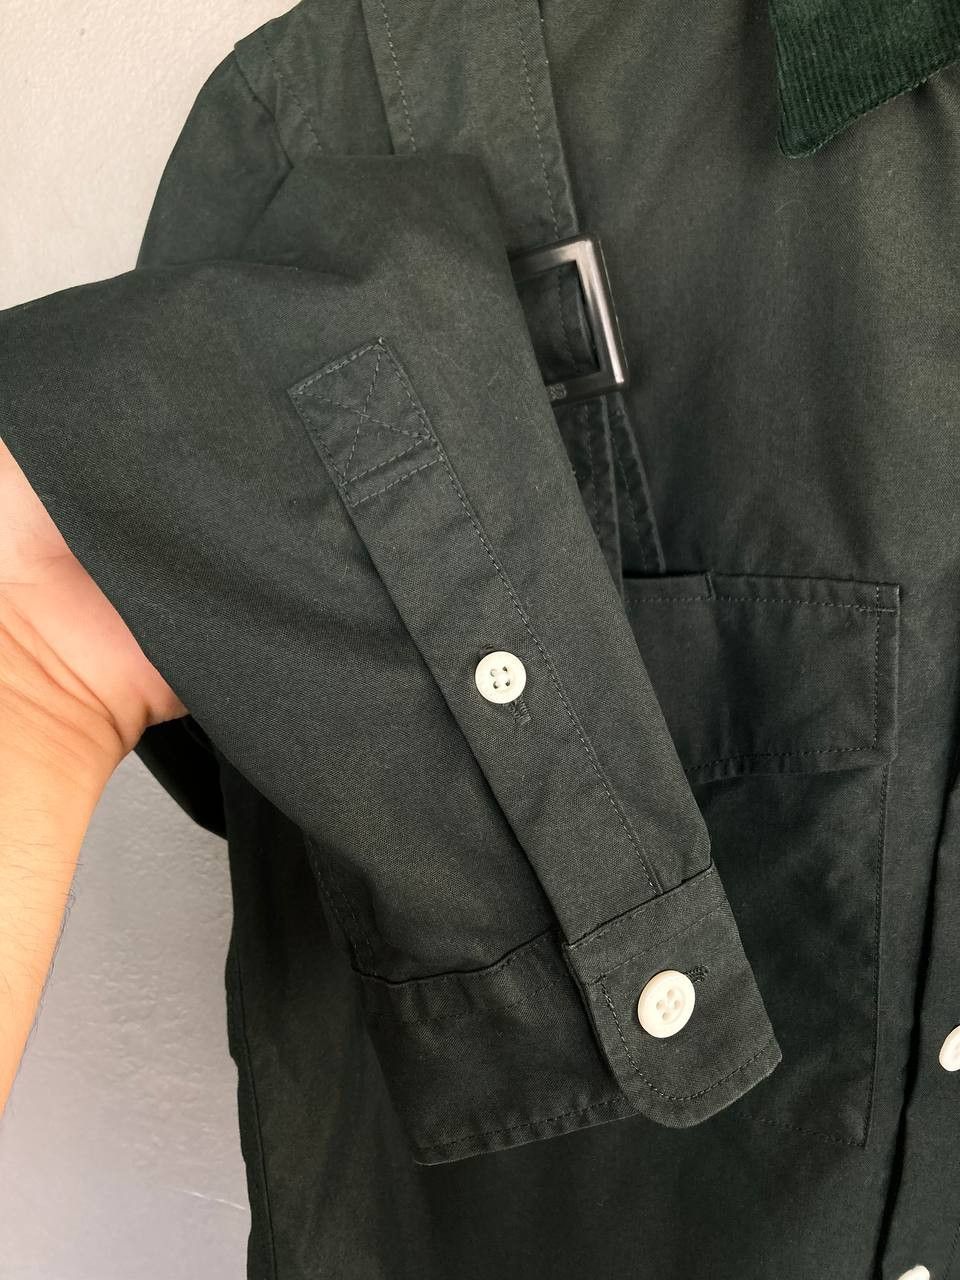 AW18 Kim Jones x GU Military Strap Buttoned Shirt - 7